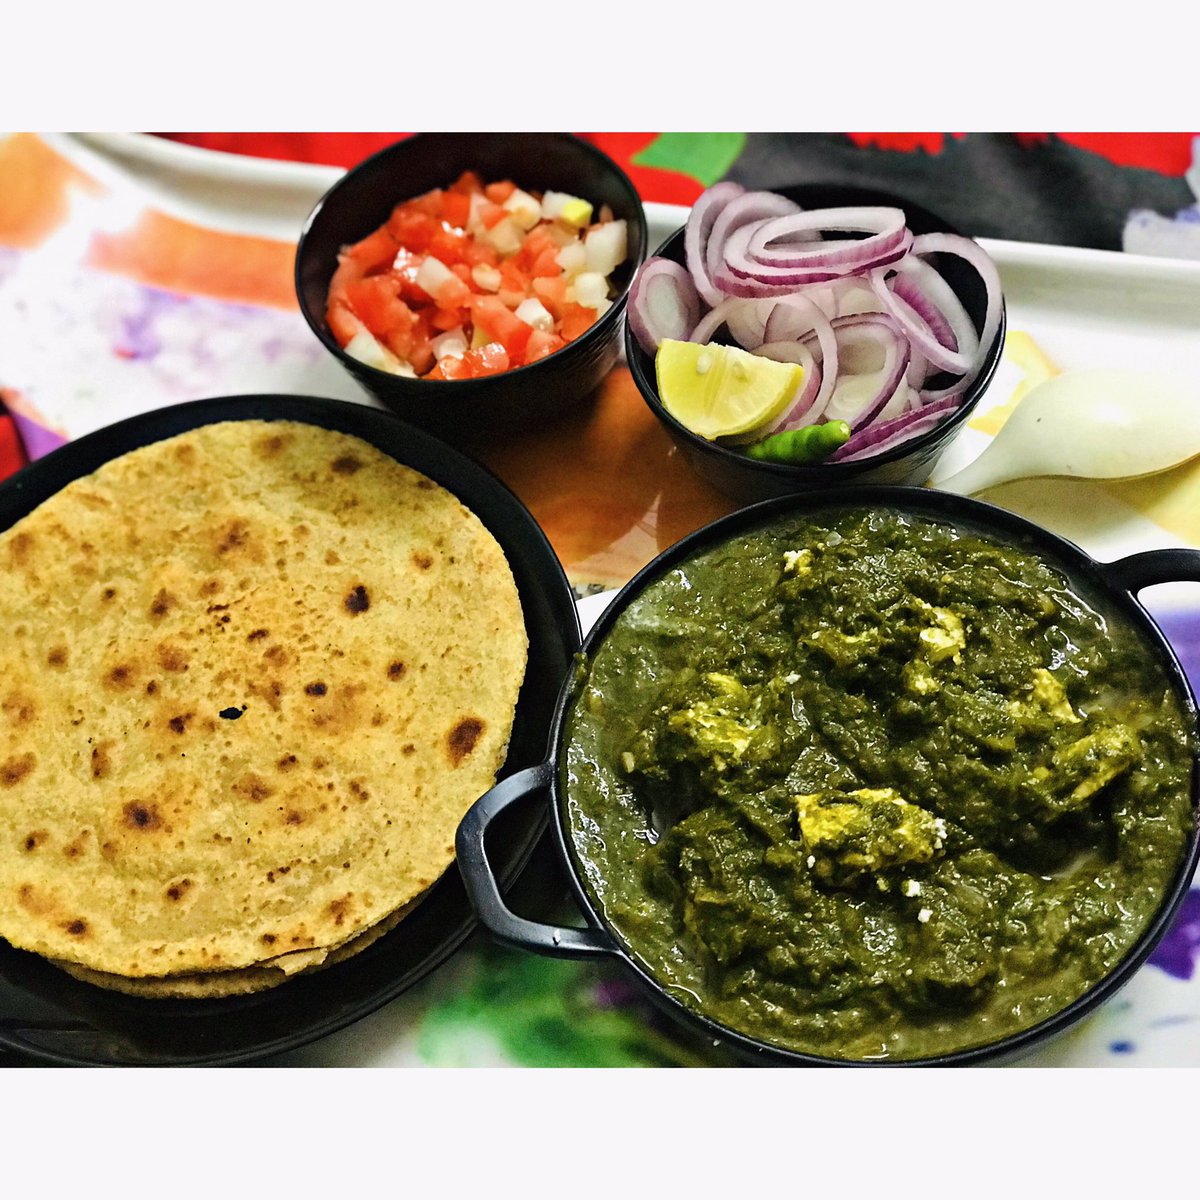 Dinner scenes alert !!
What: Palak Paneer and Lachha Paratha🥬🥘
.
.
DM FOR RECIPE 
#palakpaneer #dinnertime🍽 #dinnertimewithfamily #lachhaparatha #vegetarianrecipes #heydelhii #delhifoodie #recipesbykj  #kiranjindal06 #zingyzest #desikhanaisthebest #indiandinner #delish